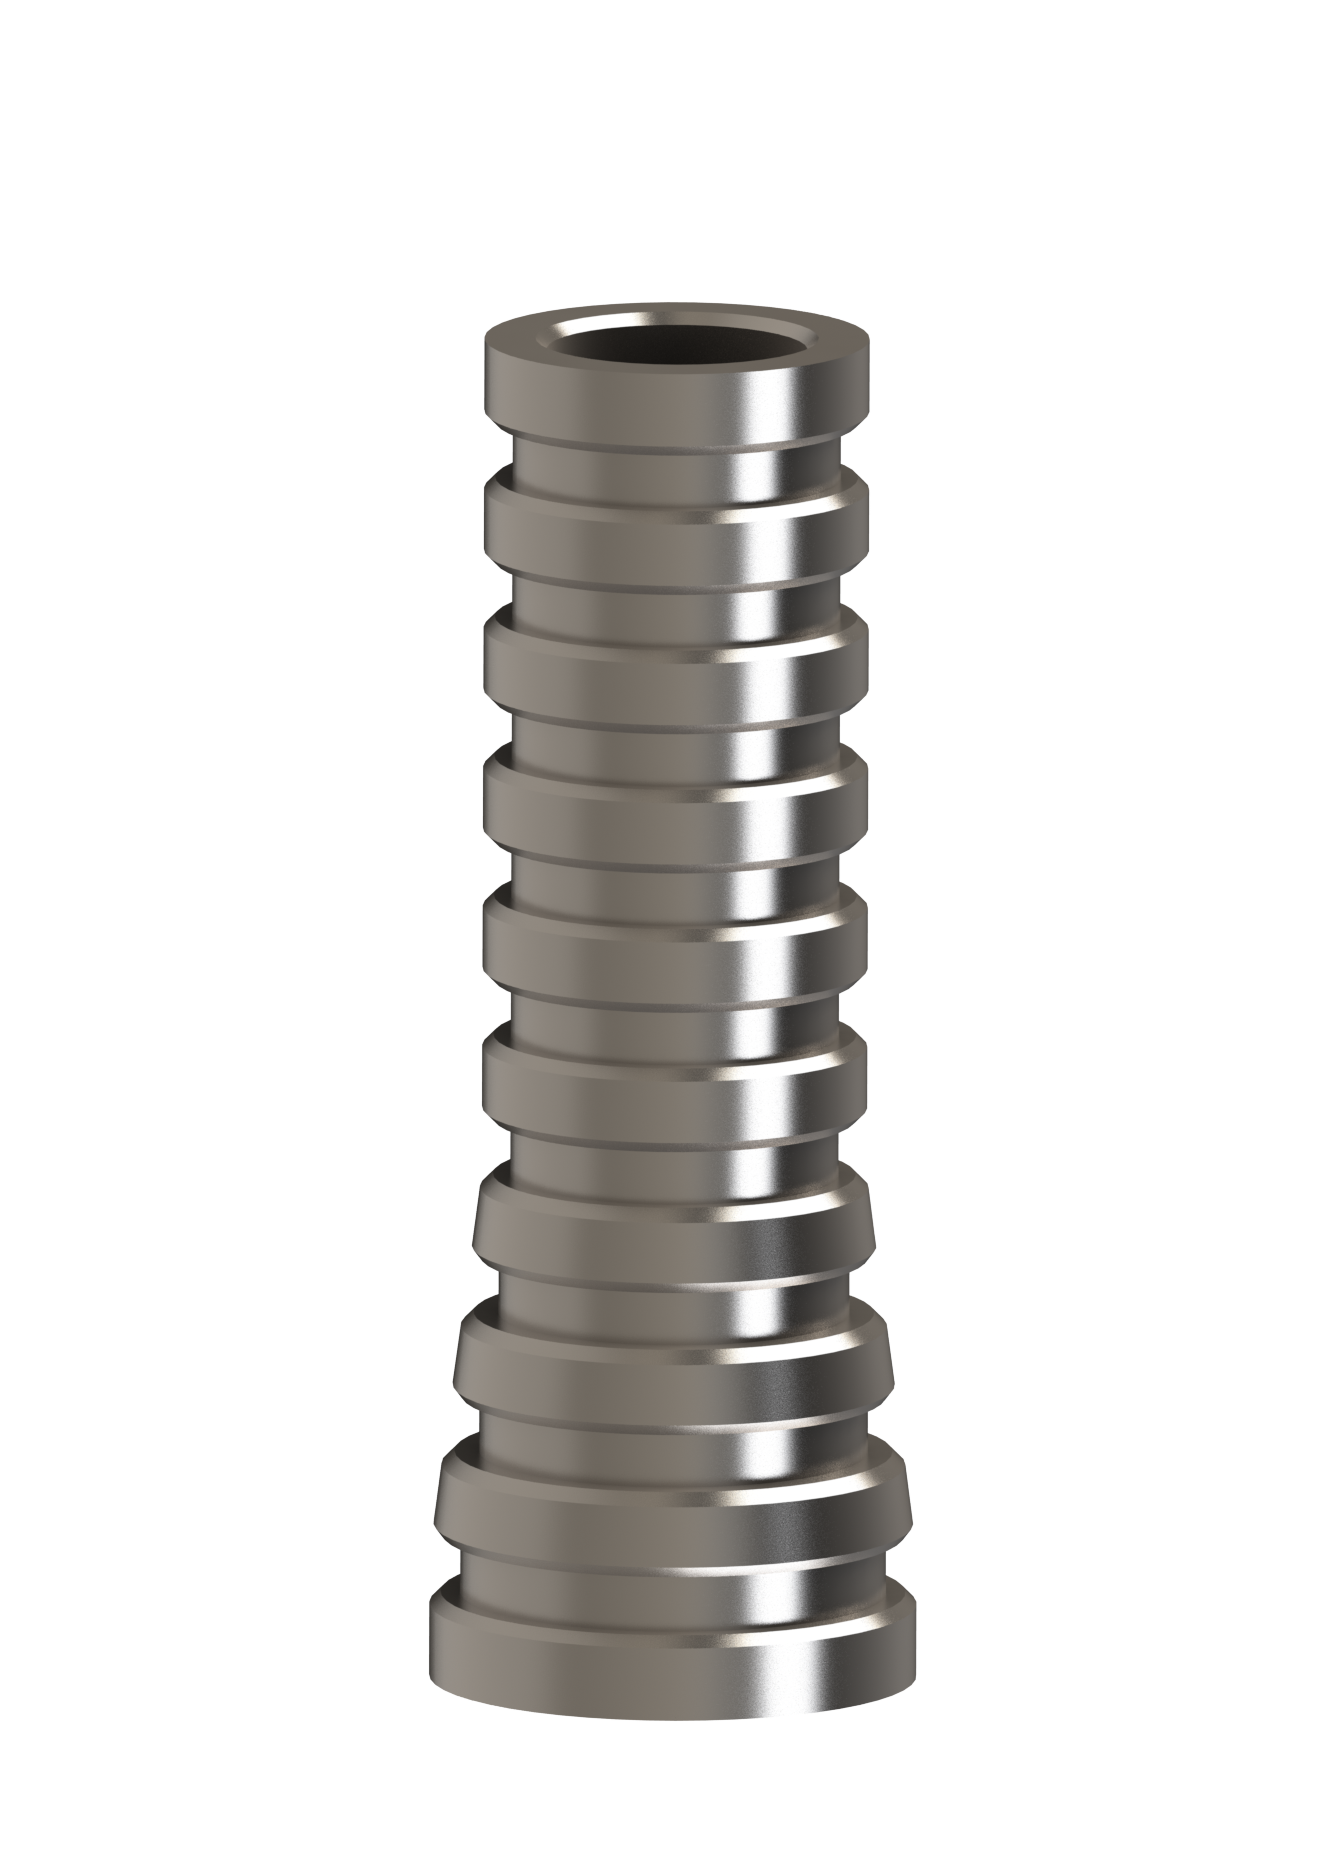 GAVAA titanium cuff for abutment with screw fixation